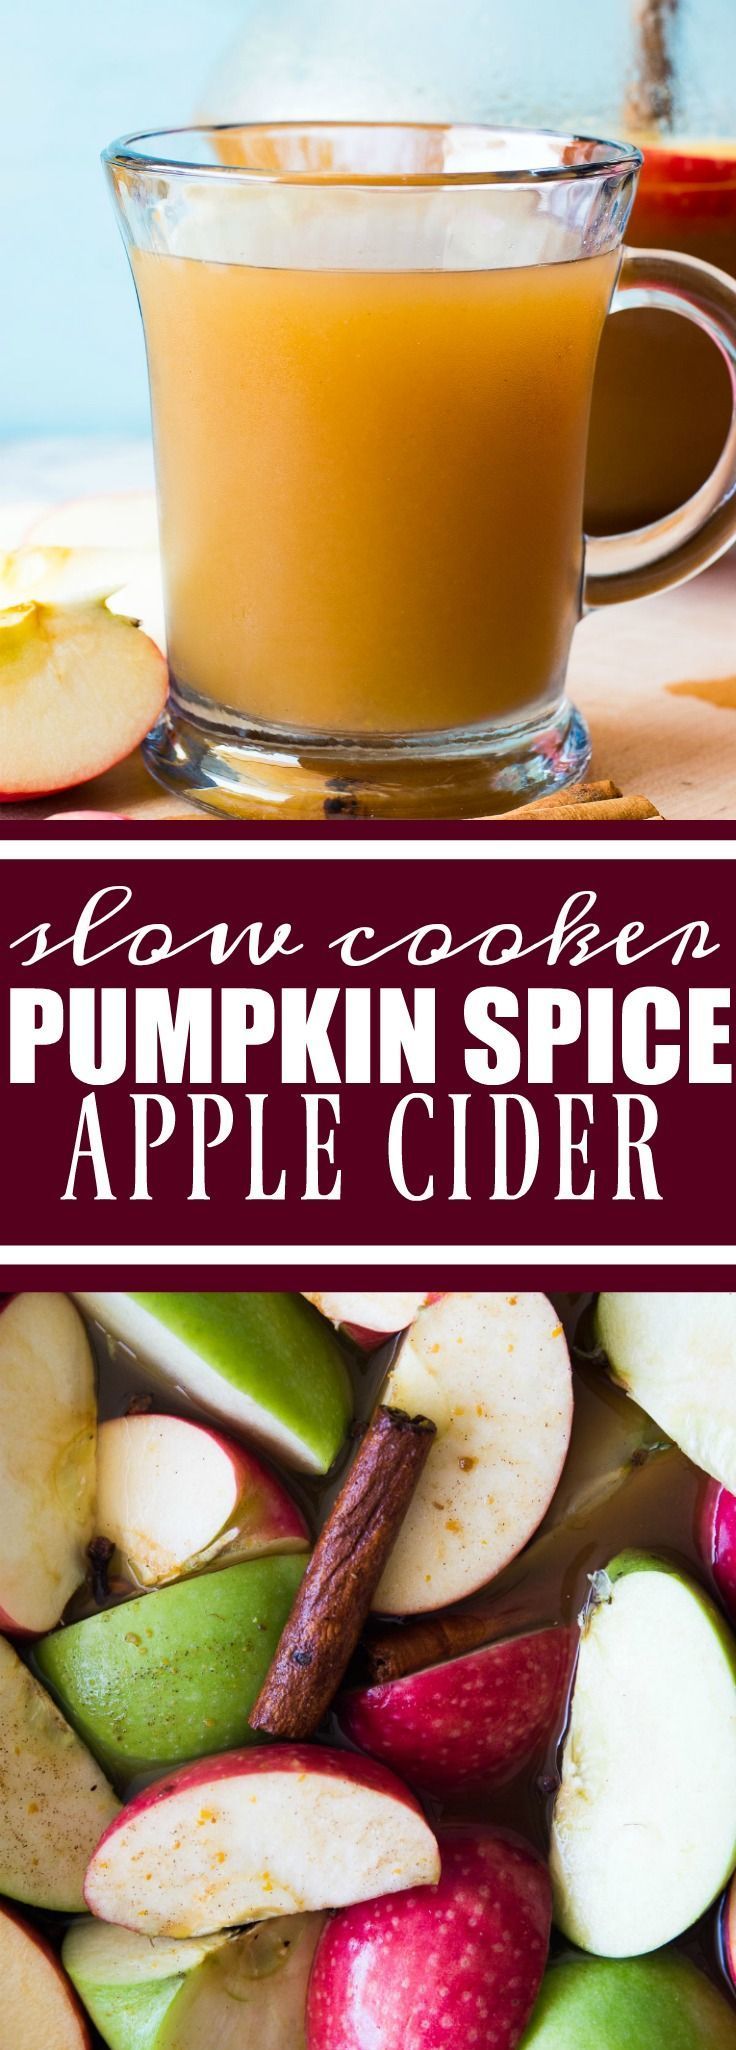 {Slow Cooker} Pumpkin Spice Apple Cider                                                                                                                                                                                 More -   22 pumpkin recipes crockpot
 ideas